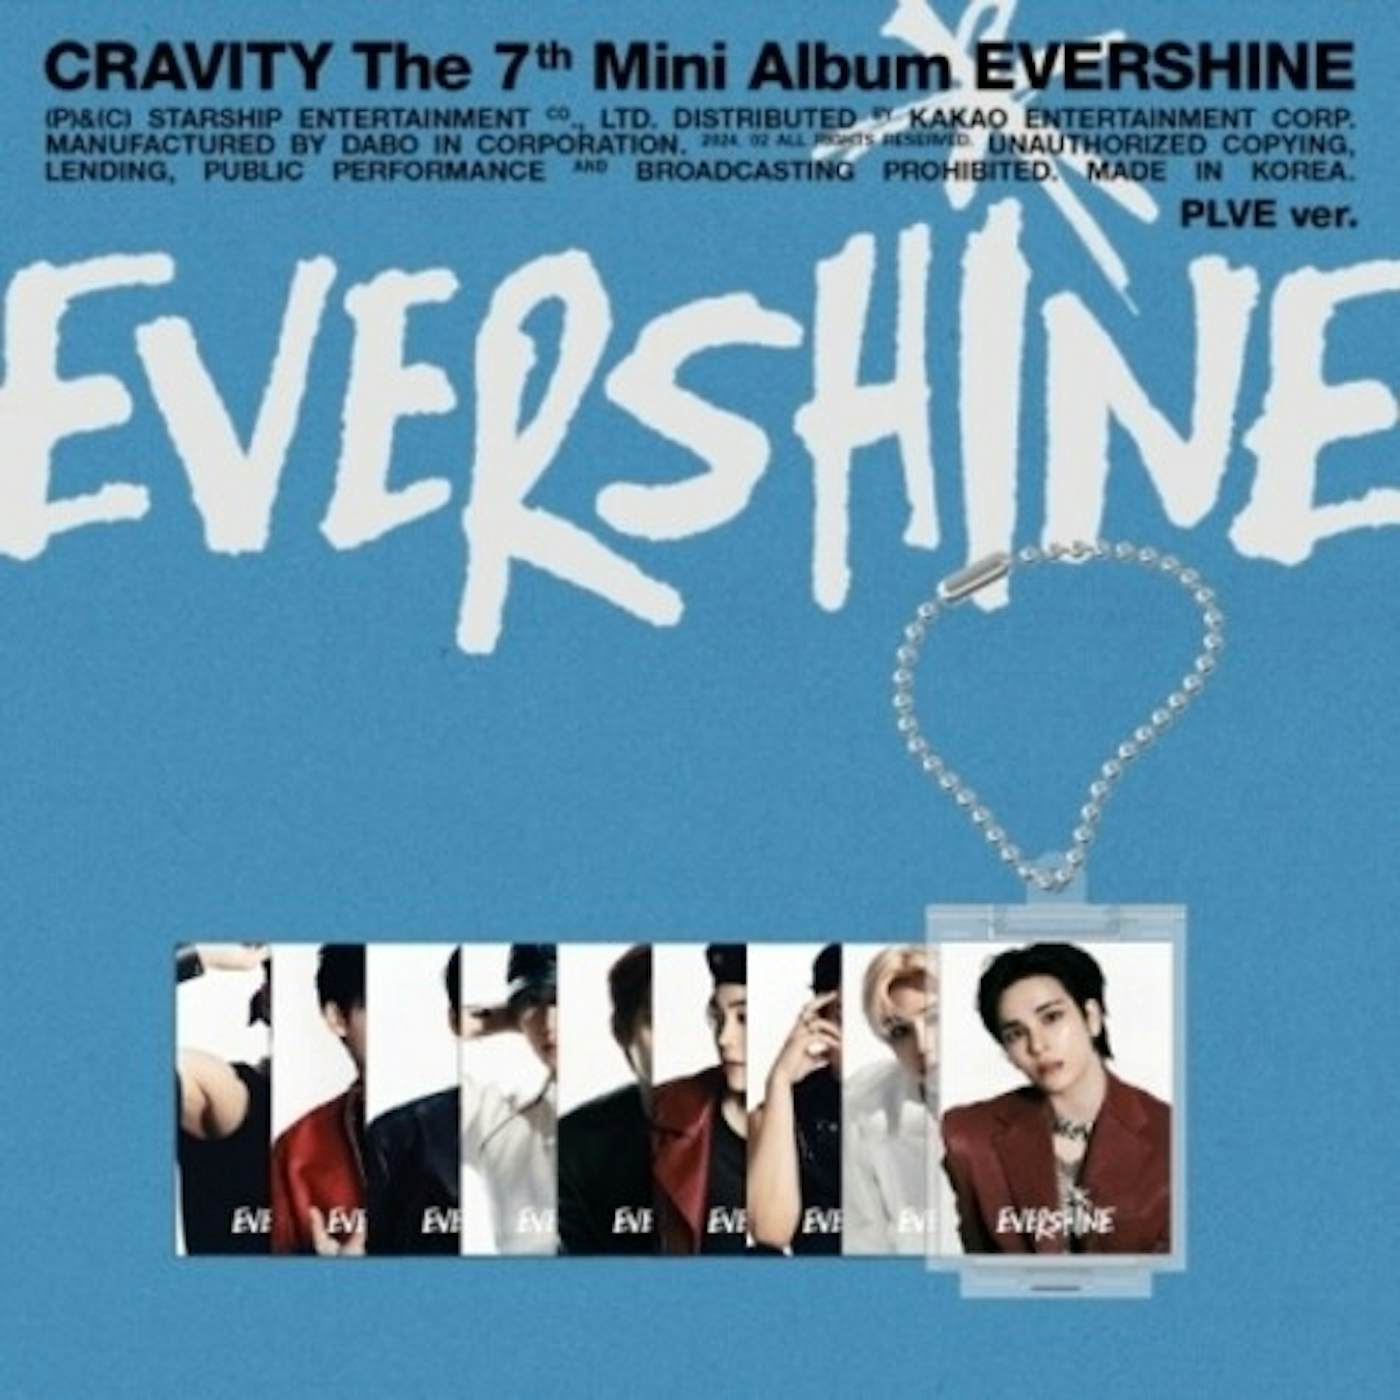 CRAVITY EVERSHINE - RANDOM COVER - PLVE VERSION CD